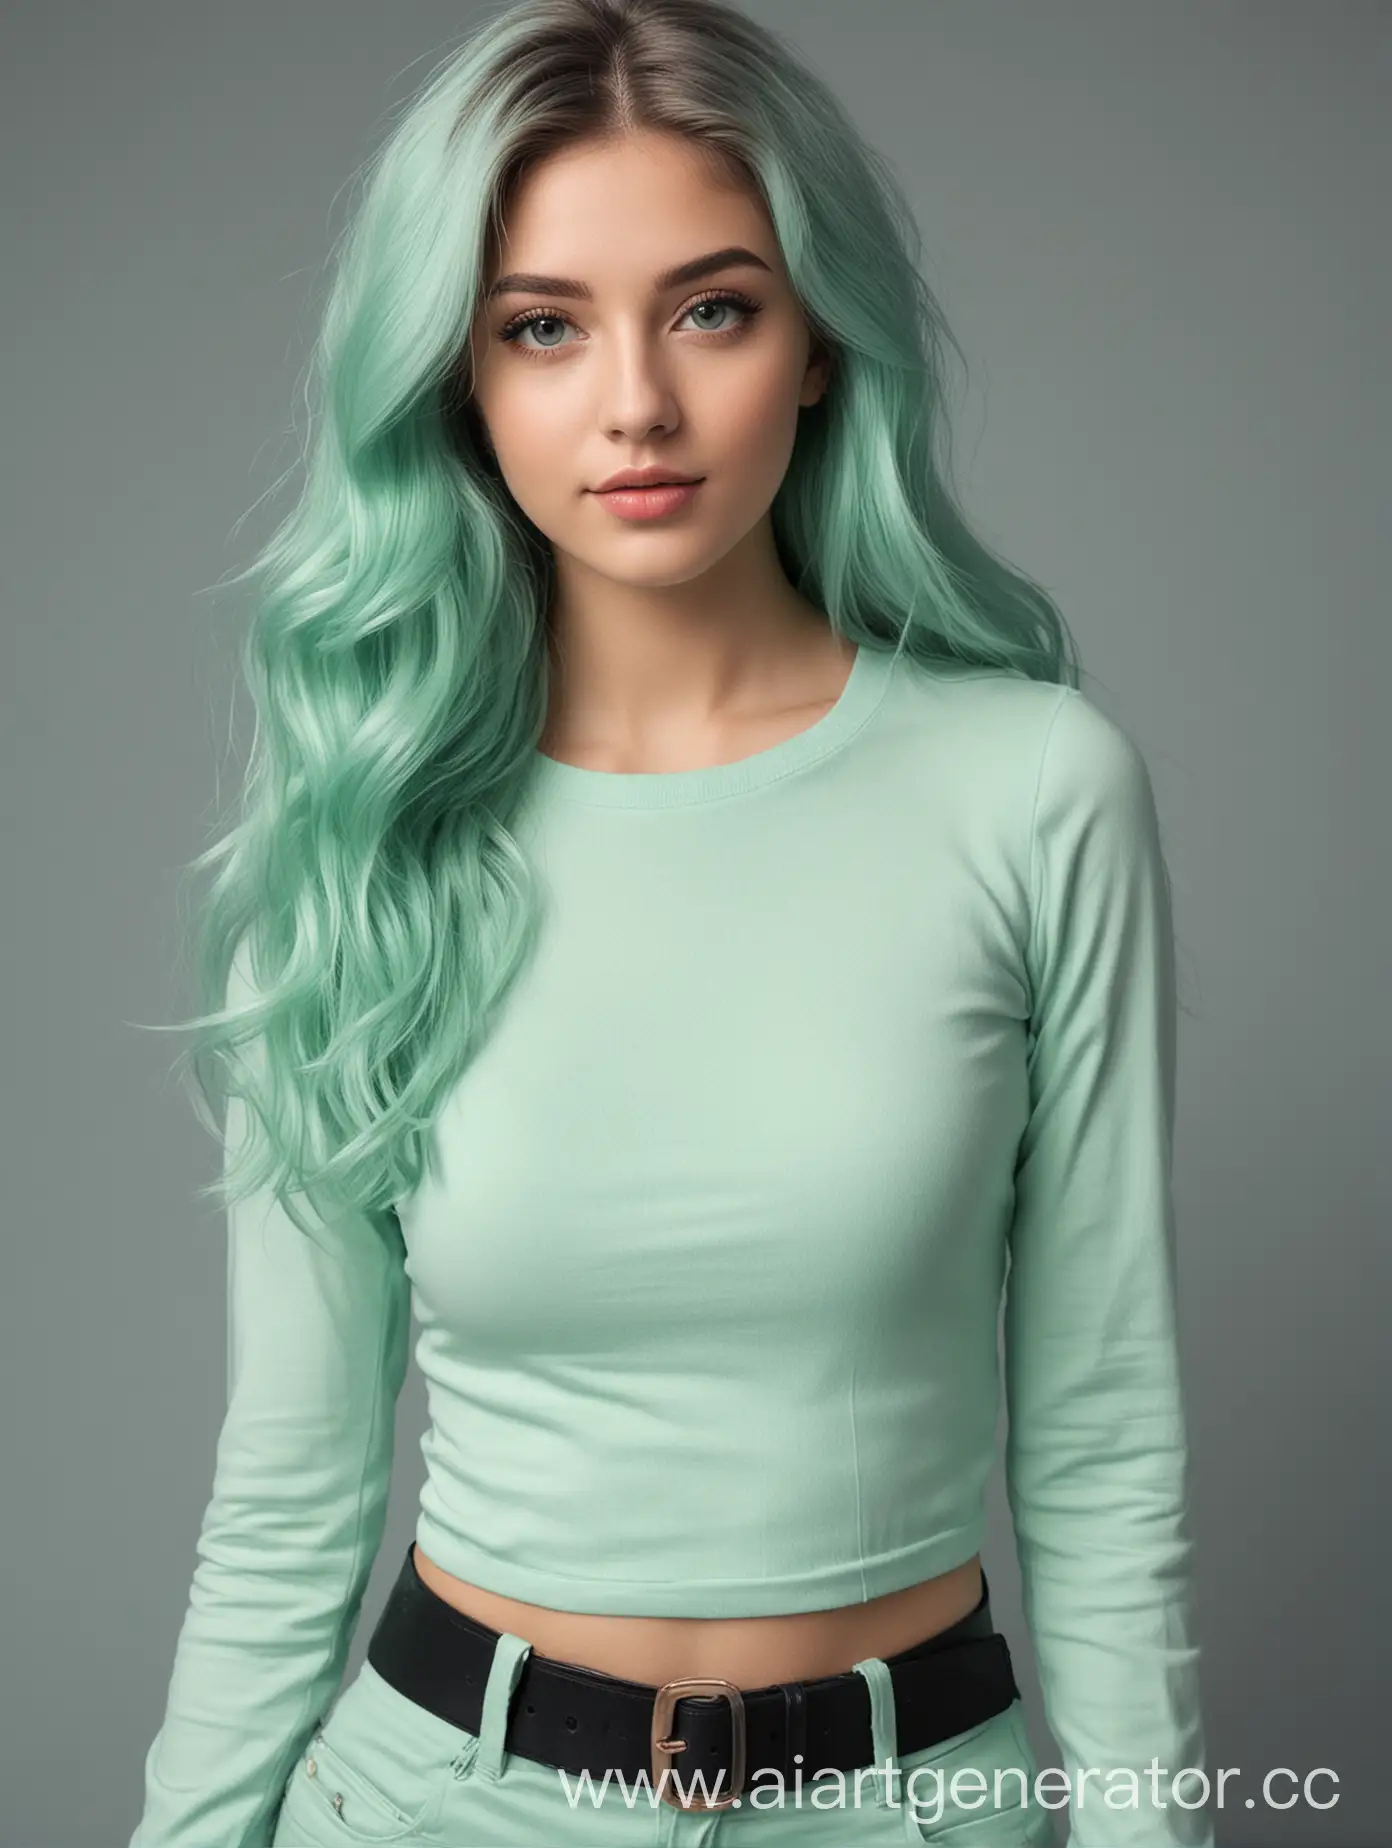 Beautiful-23YearOld-Model-with-WaistLength-MintColored-Hair